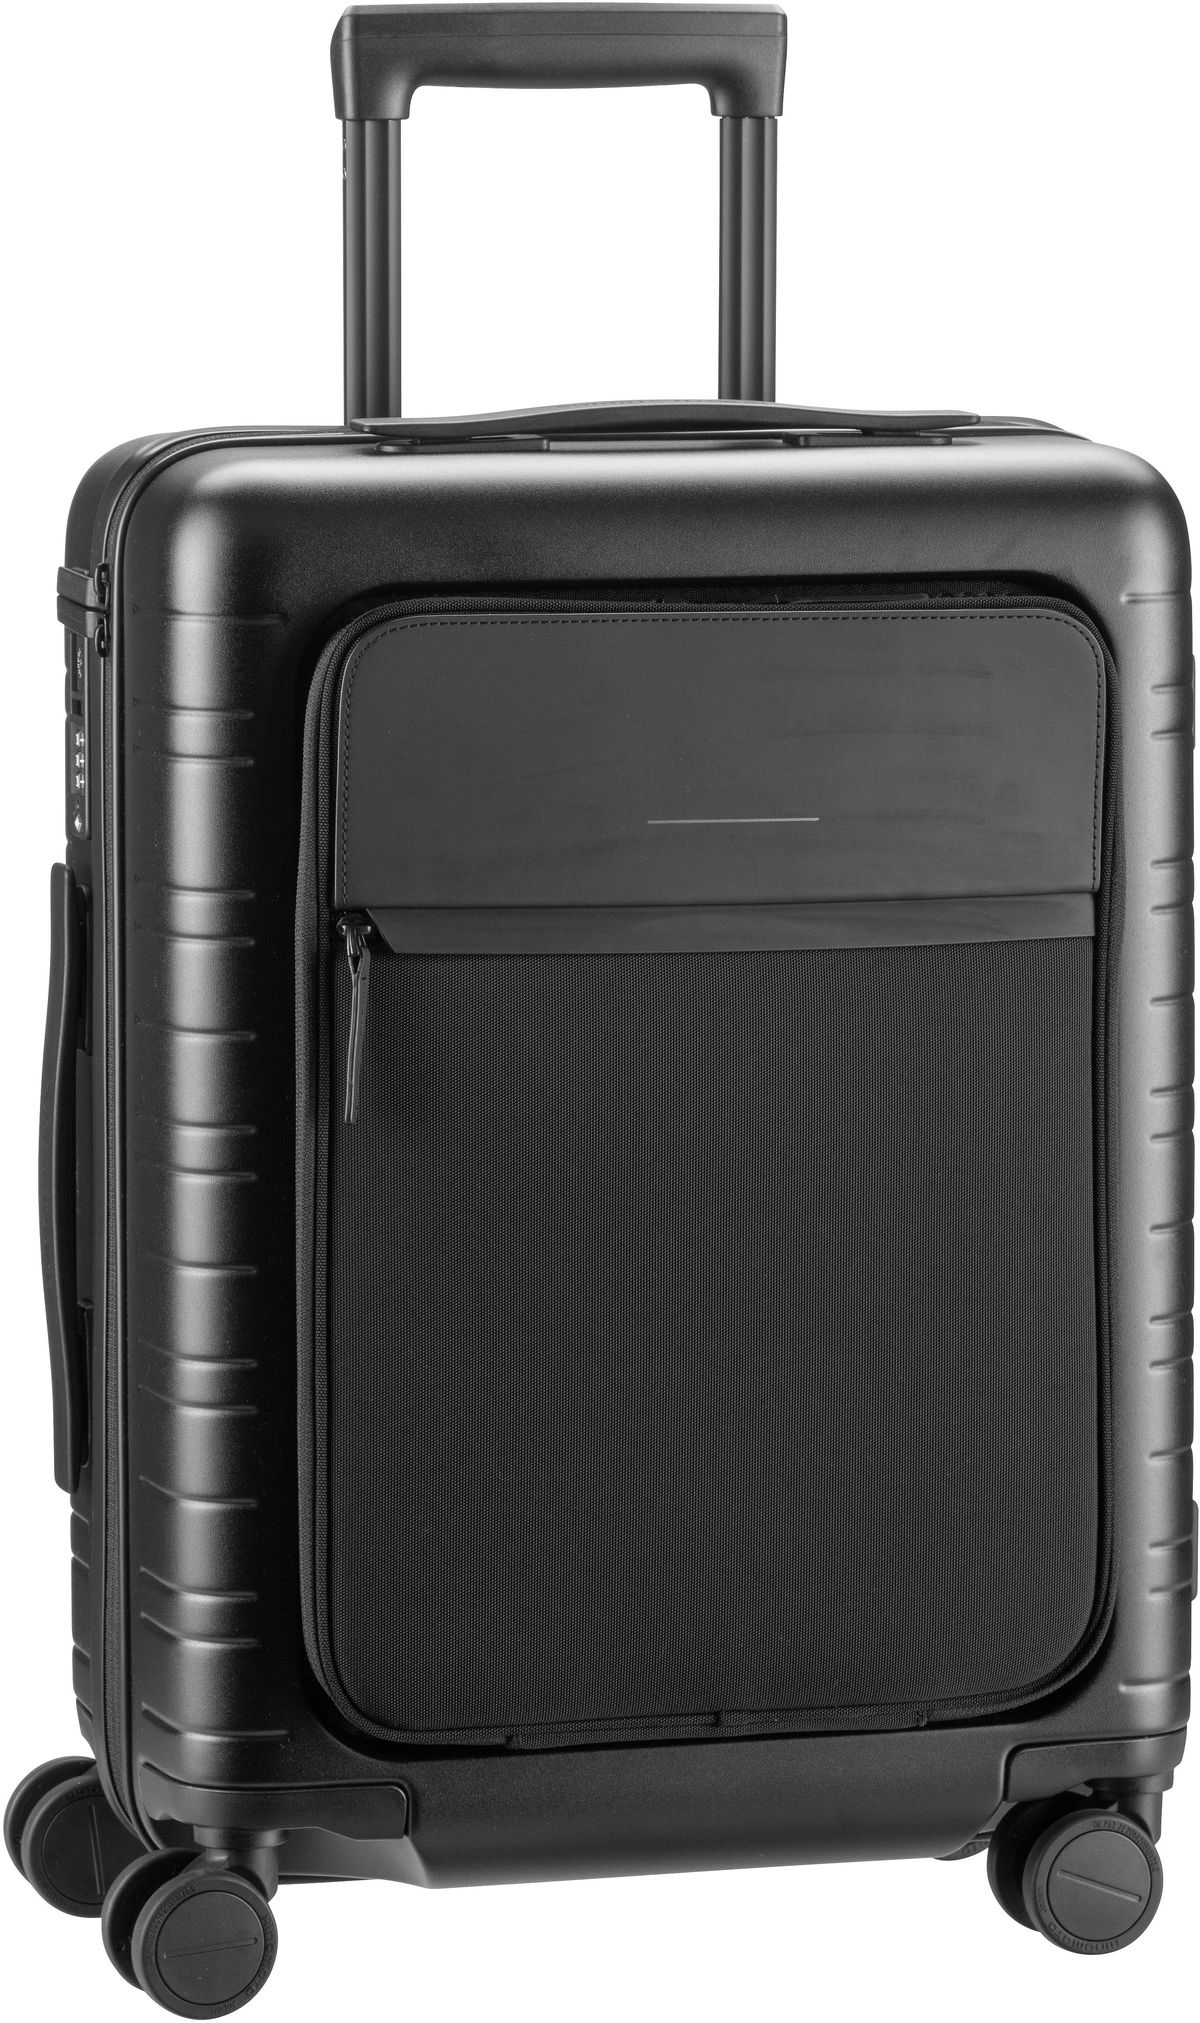 Horizn Studios M5 Smart Cabin Luggage - All Black